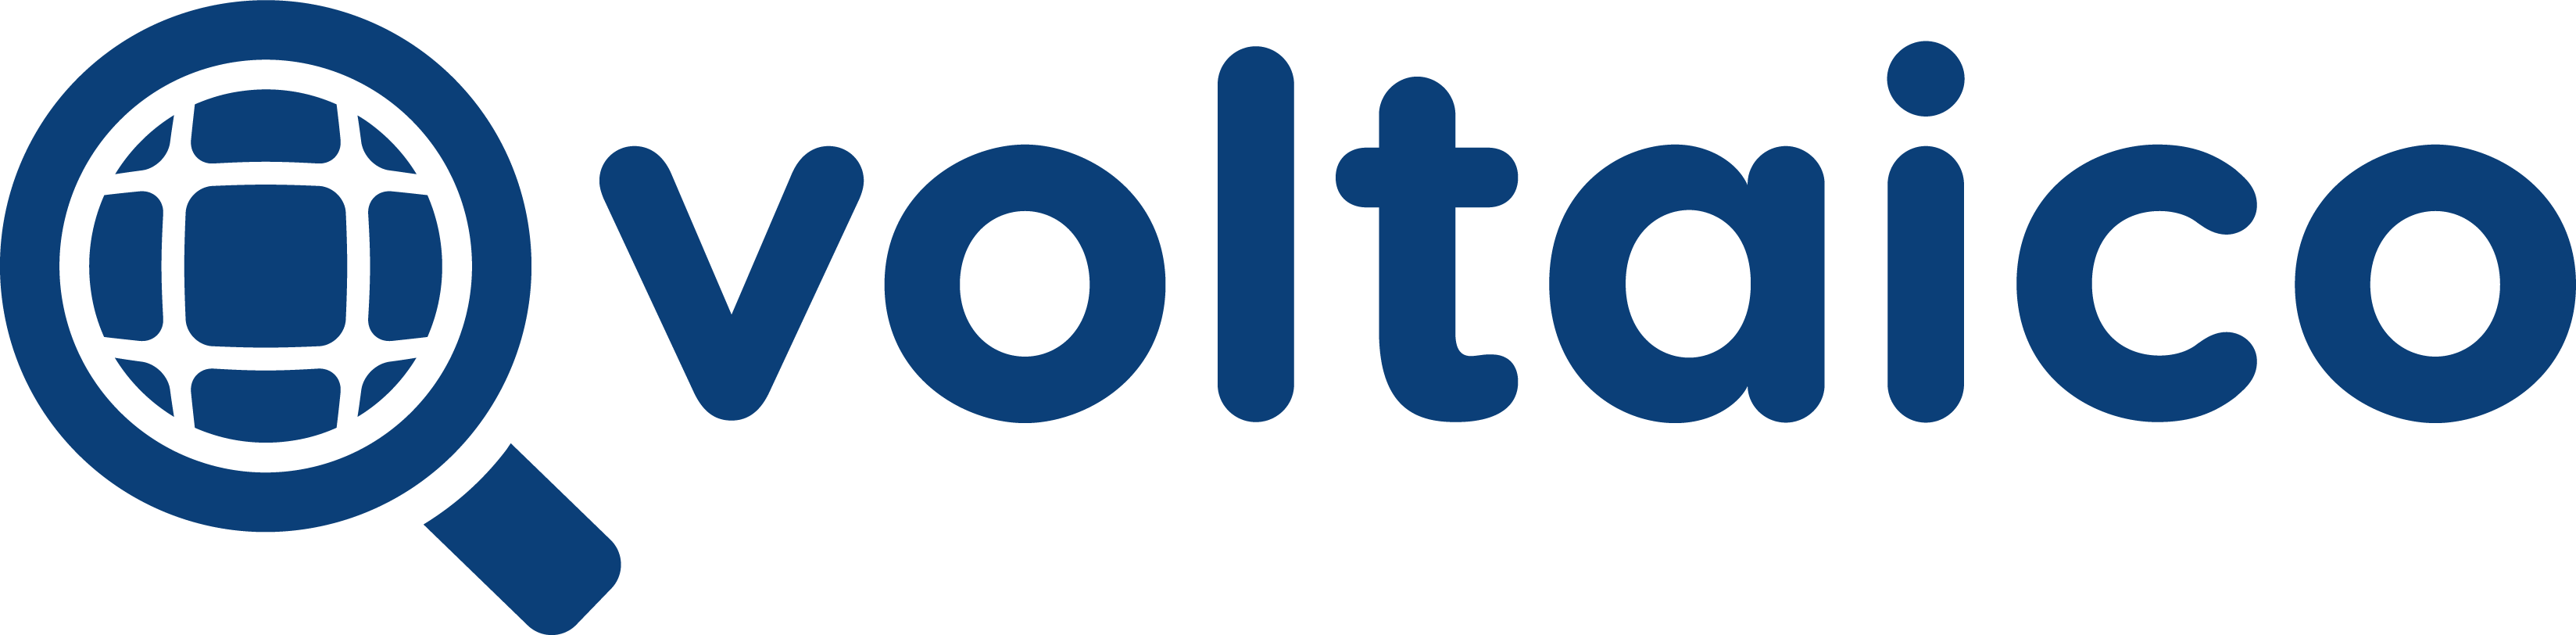 Voltaico.cz - blog